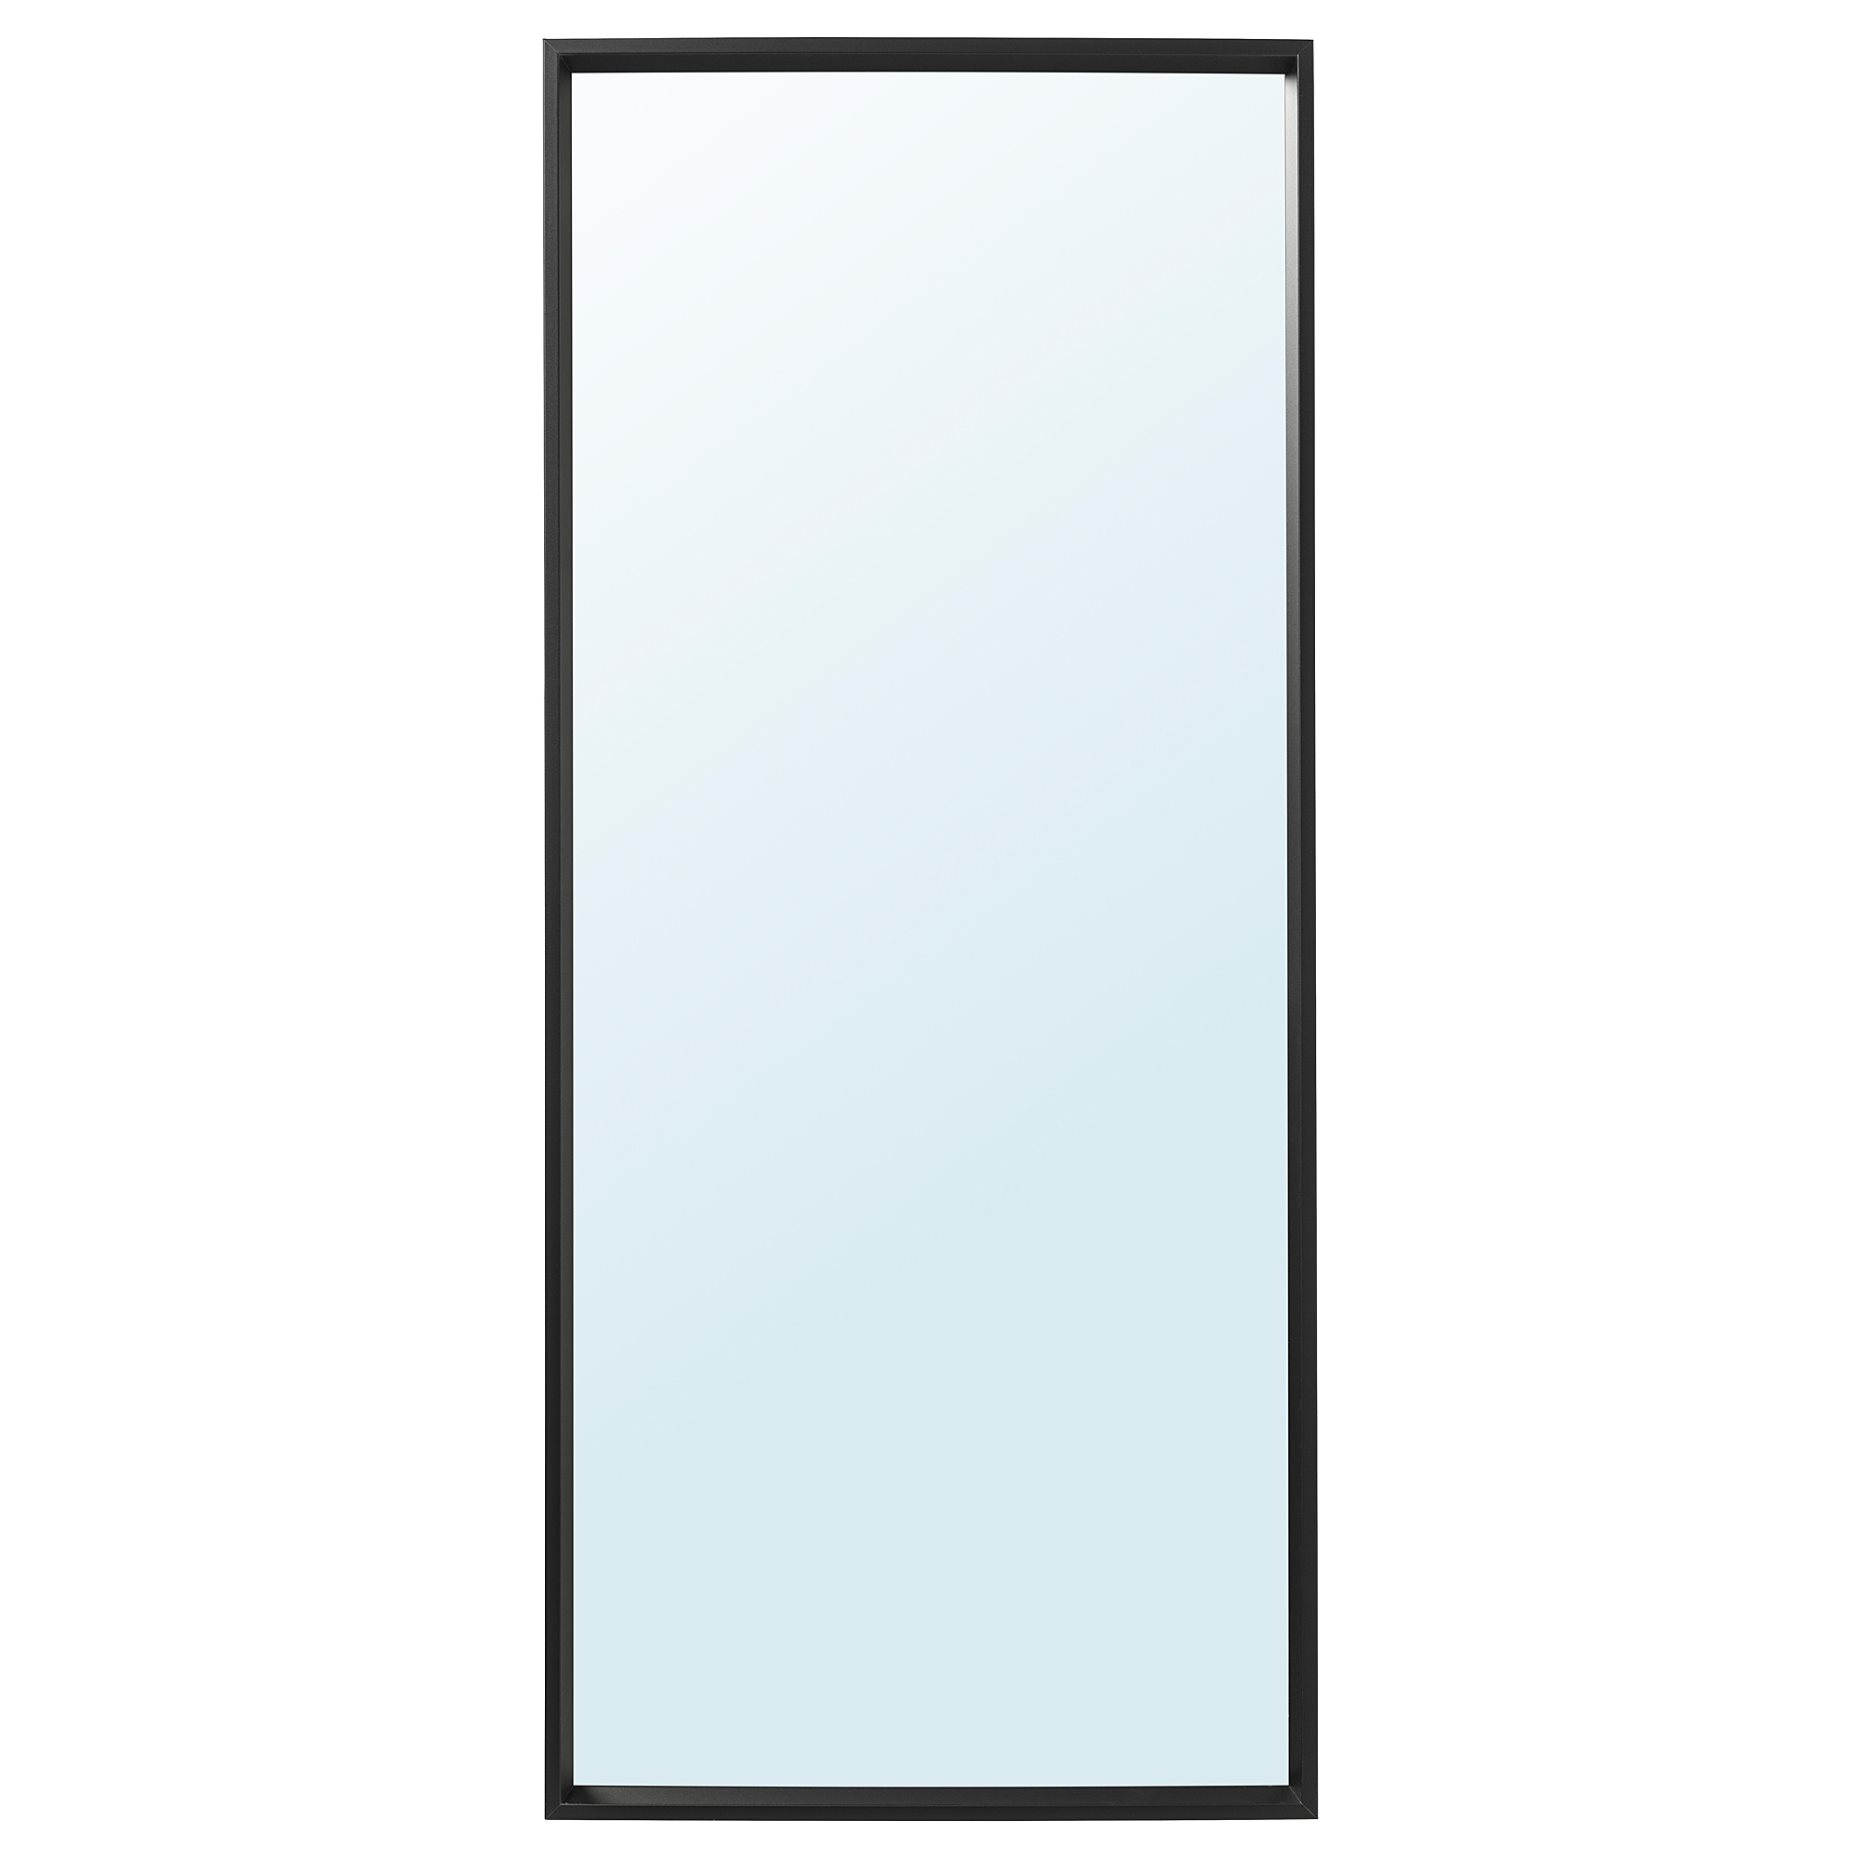 NISSEDAL, mirror, 65x150 cm, 703.203.19